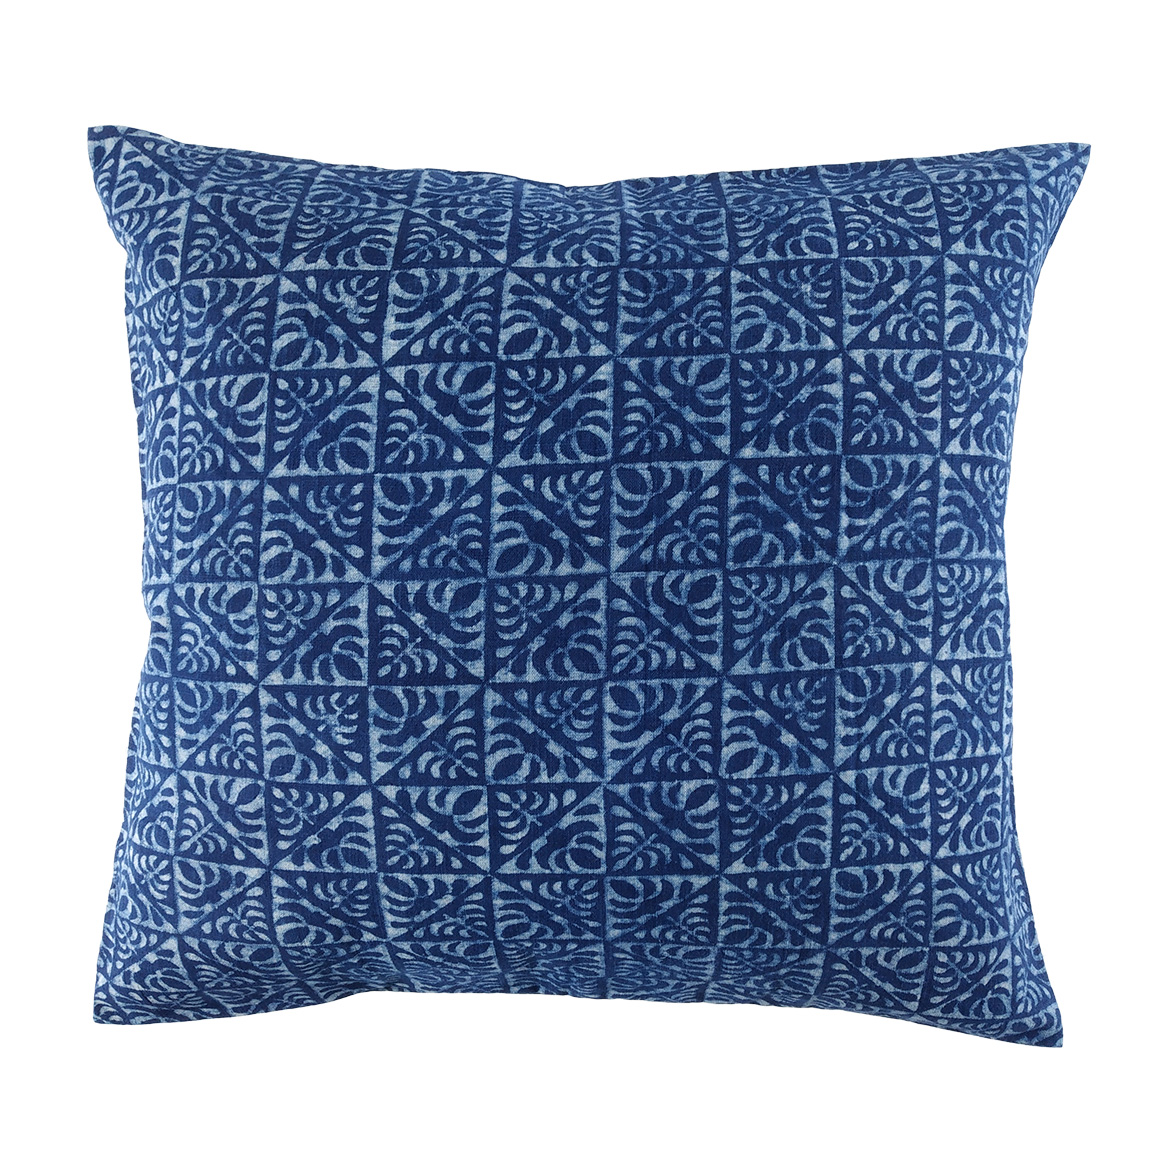 Indigo cushion covers with hand block print, abstract design - Reyavi